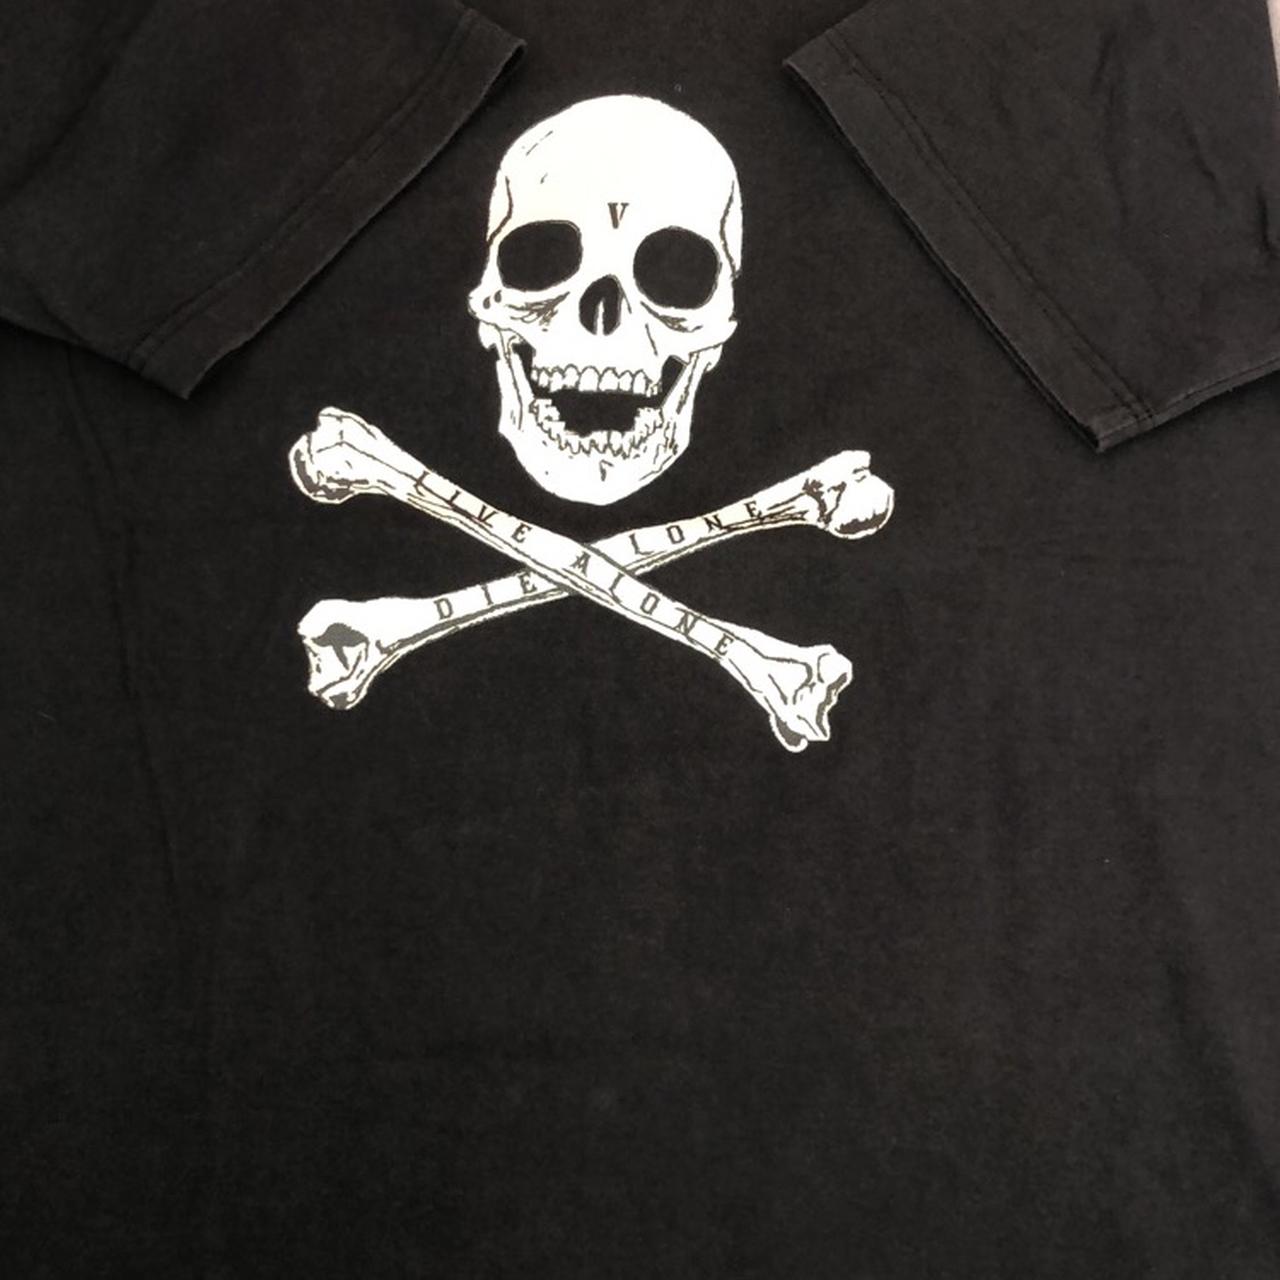 Vlone skull & bones t-shirt 250 obo